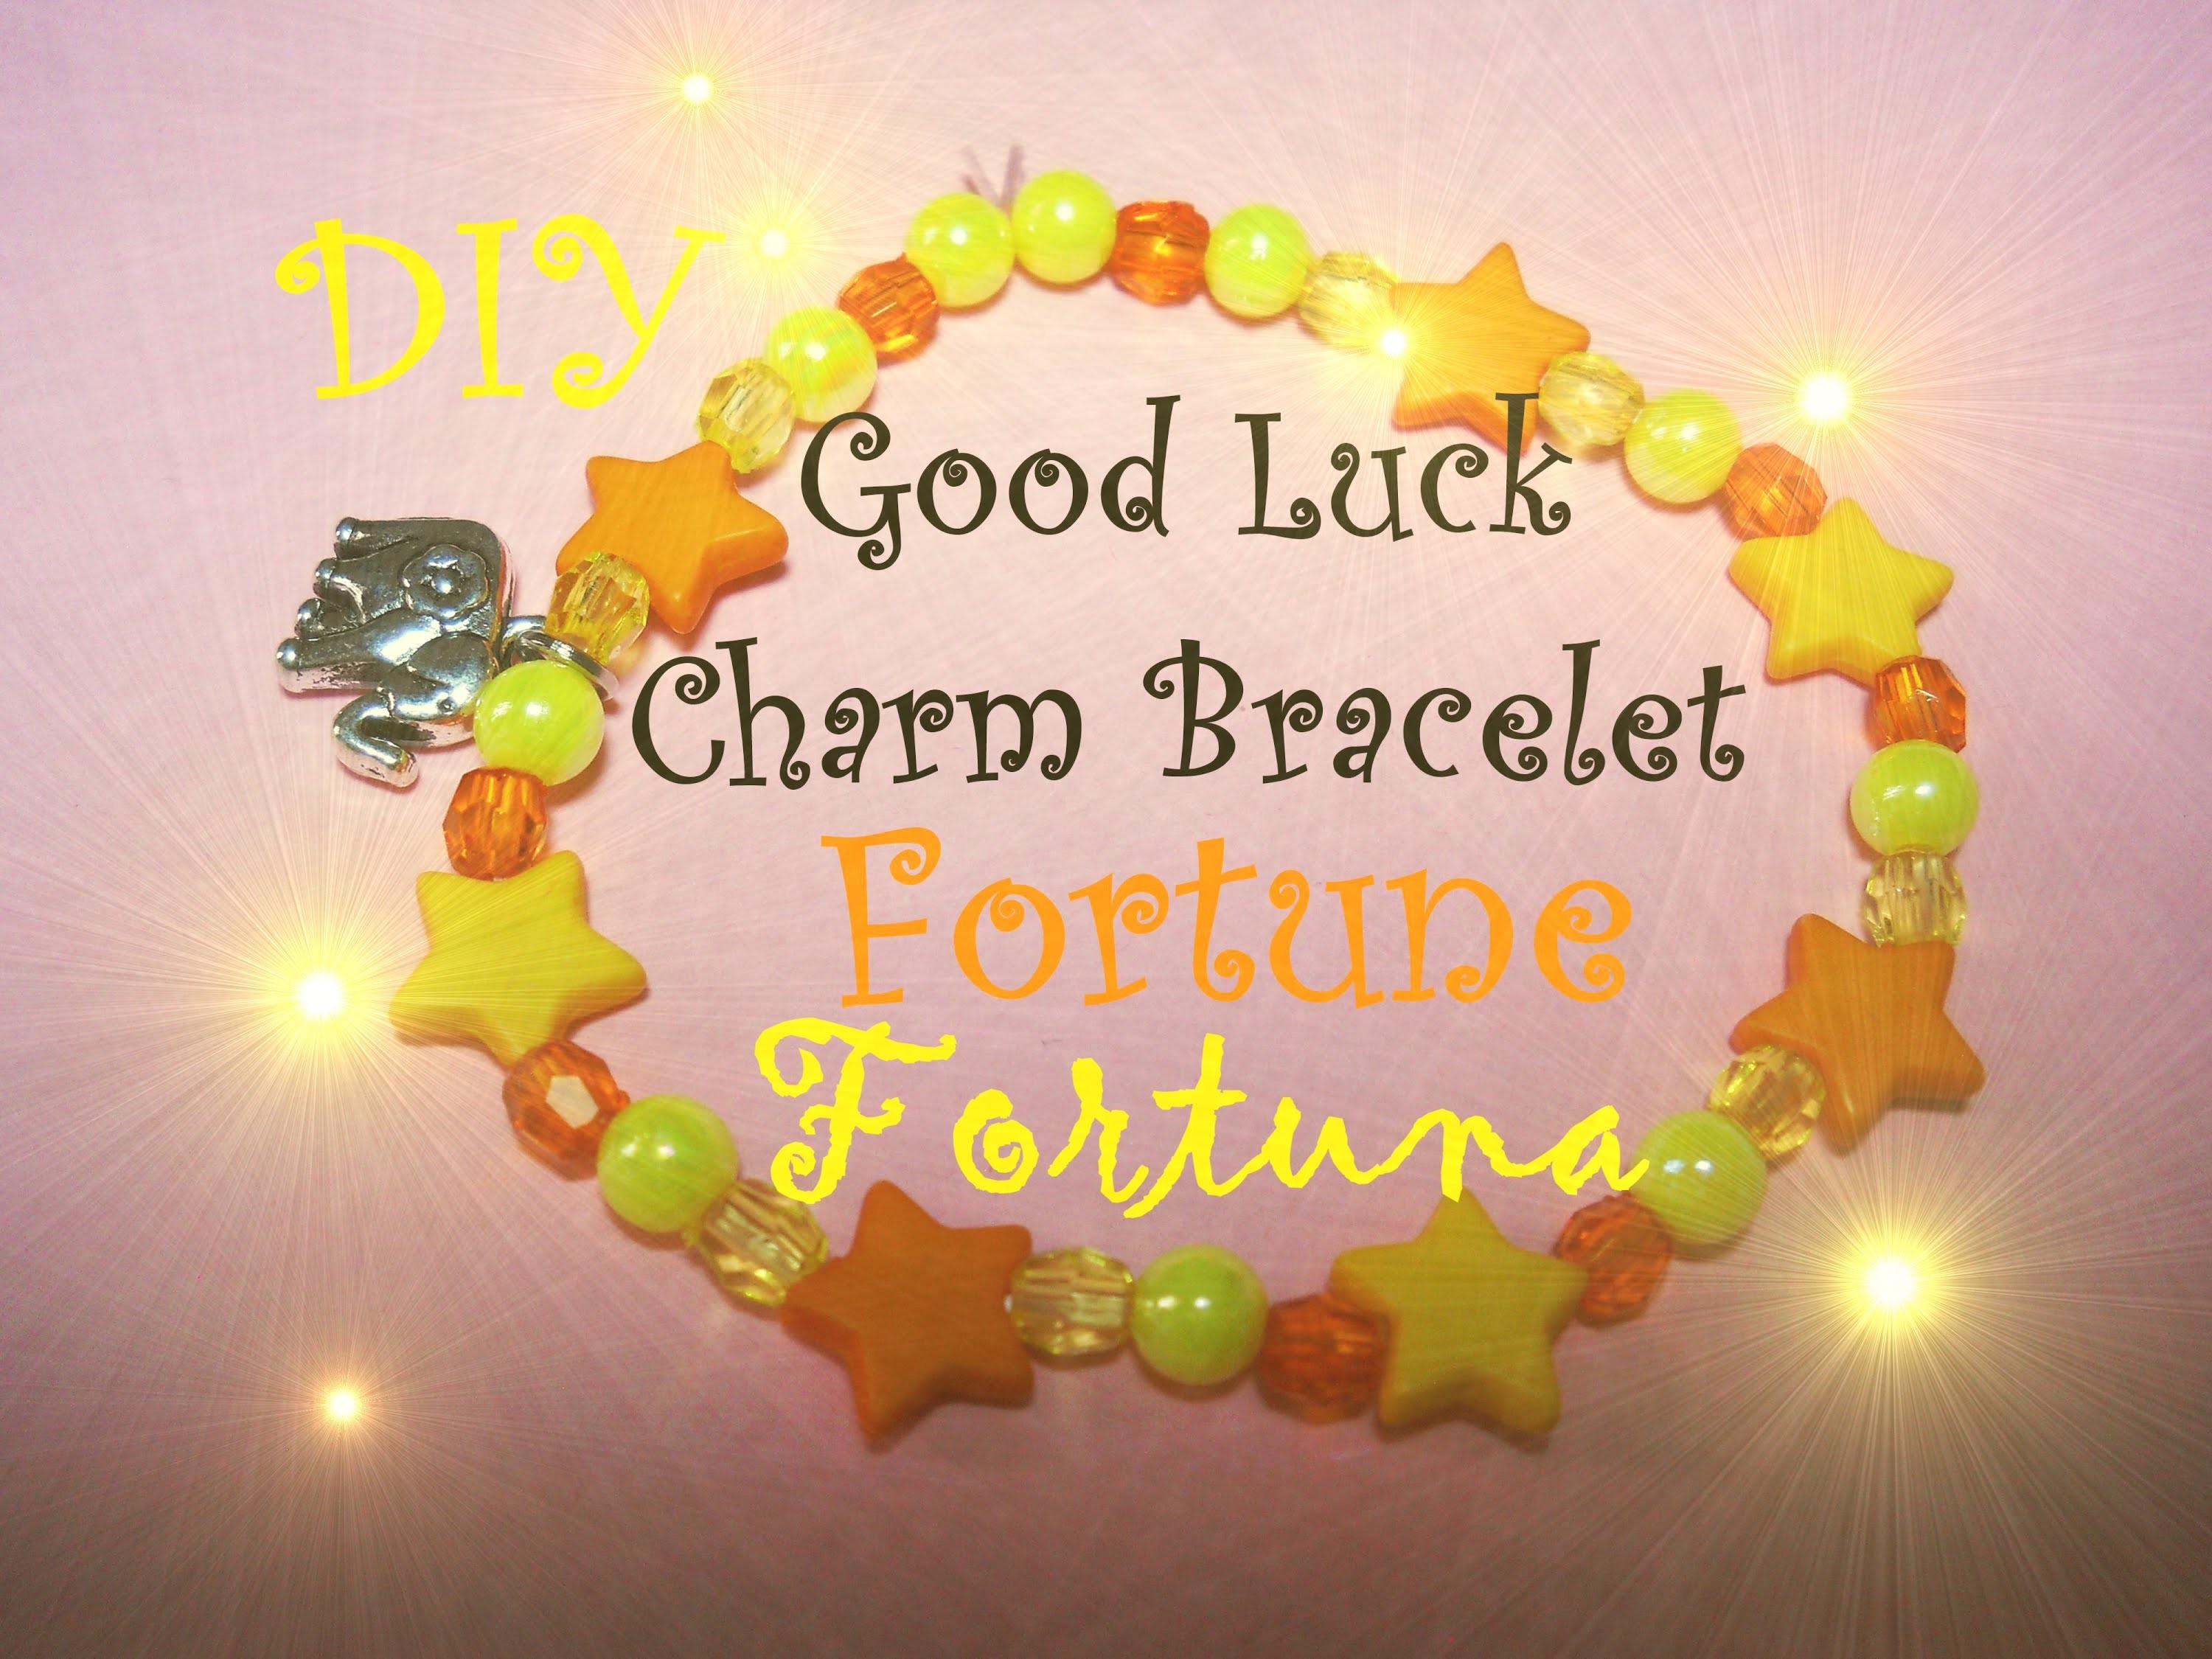 Good Luck Charm Bracelet ✧ Fortune. Luck ✧ Braccialetto della Fortuna - Tutorial. DIY. How to